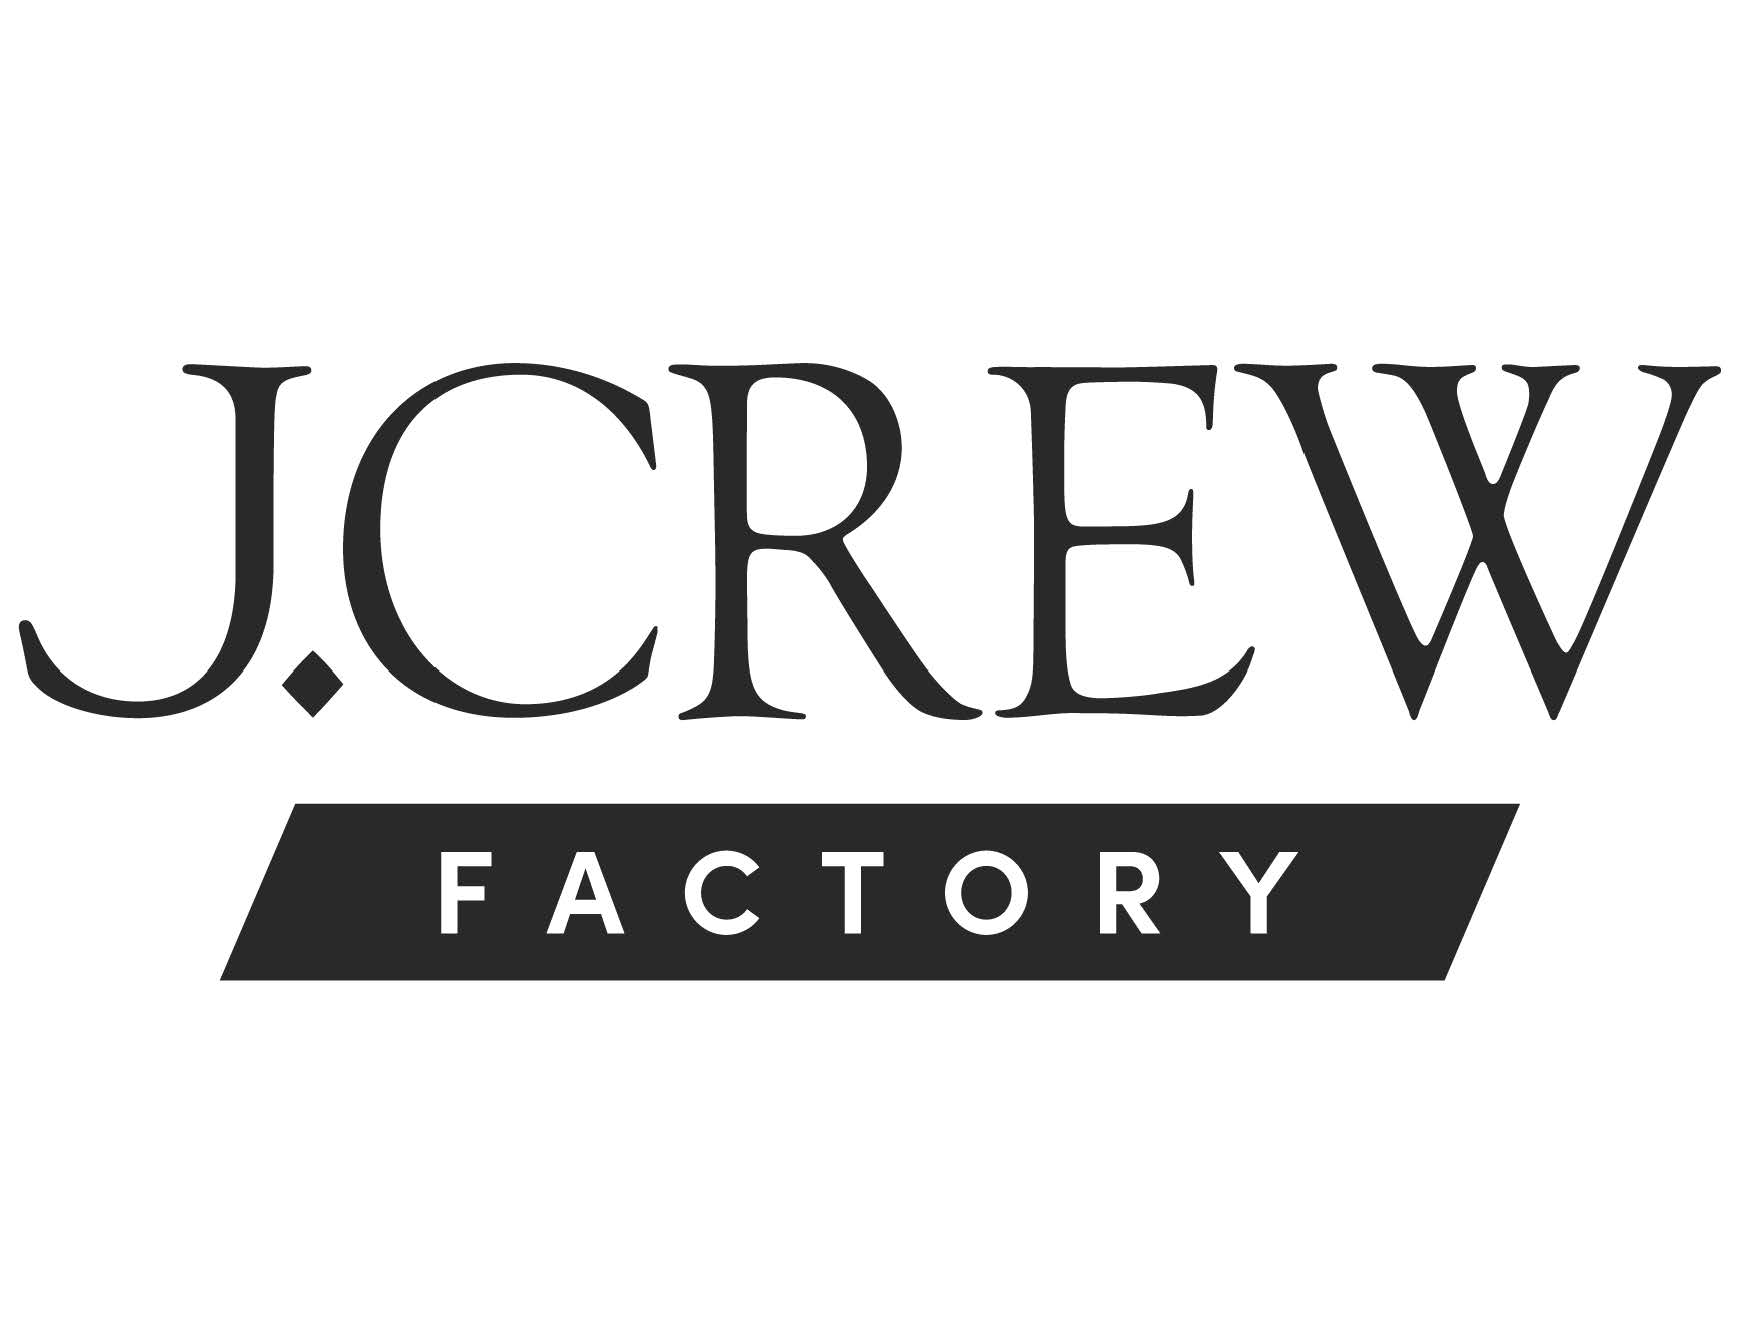 Logo - J.Crew Factory